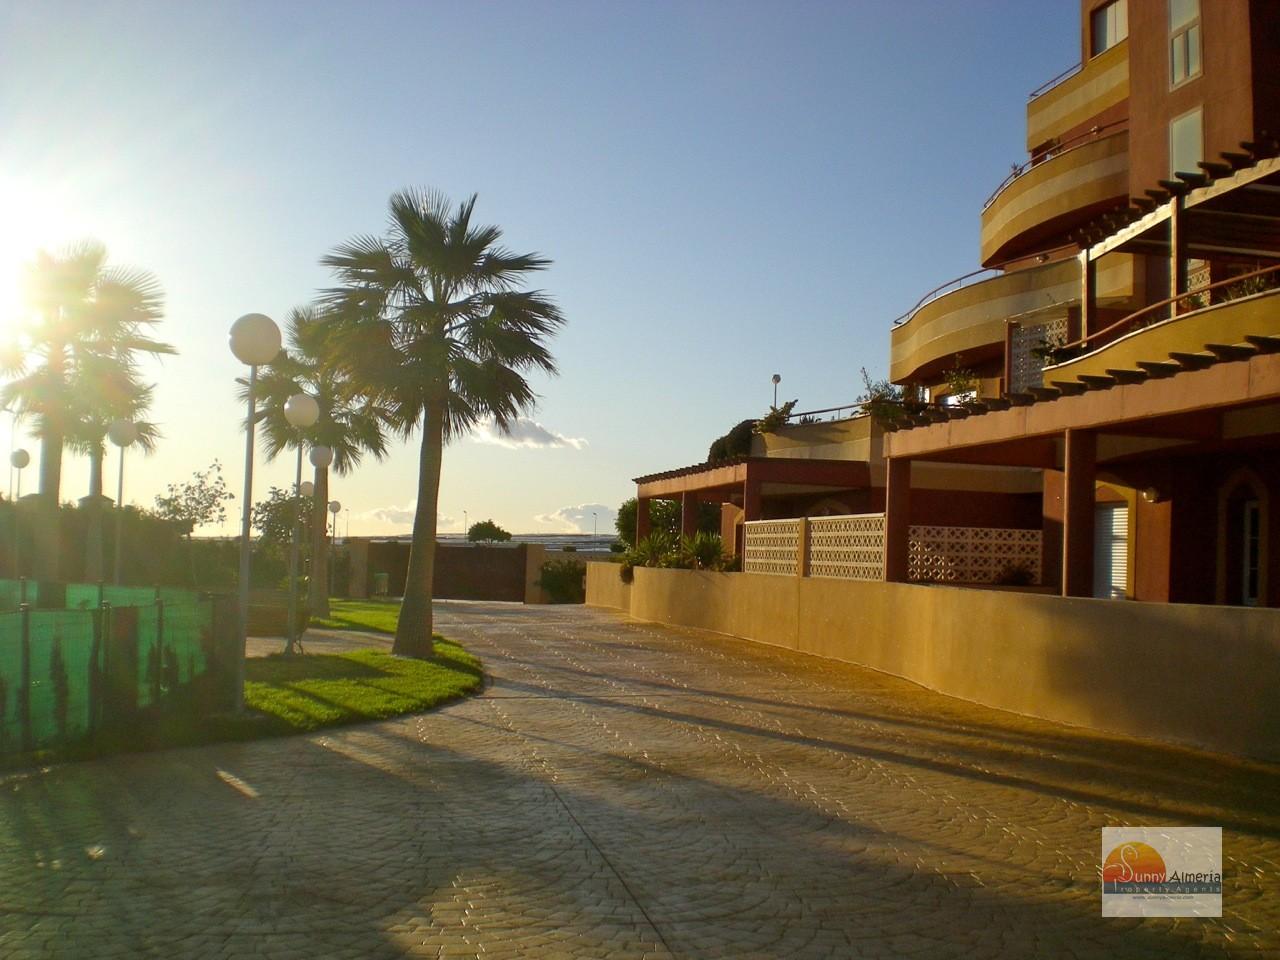 Luxury Apartment for rent in Playa Serena Sur (Roquetas de Mar), 950 €/month